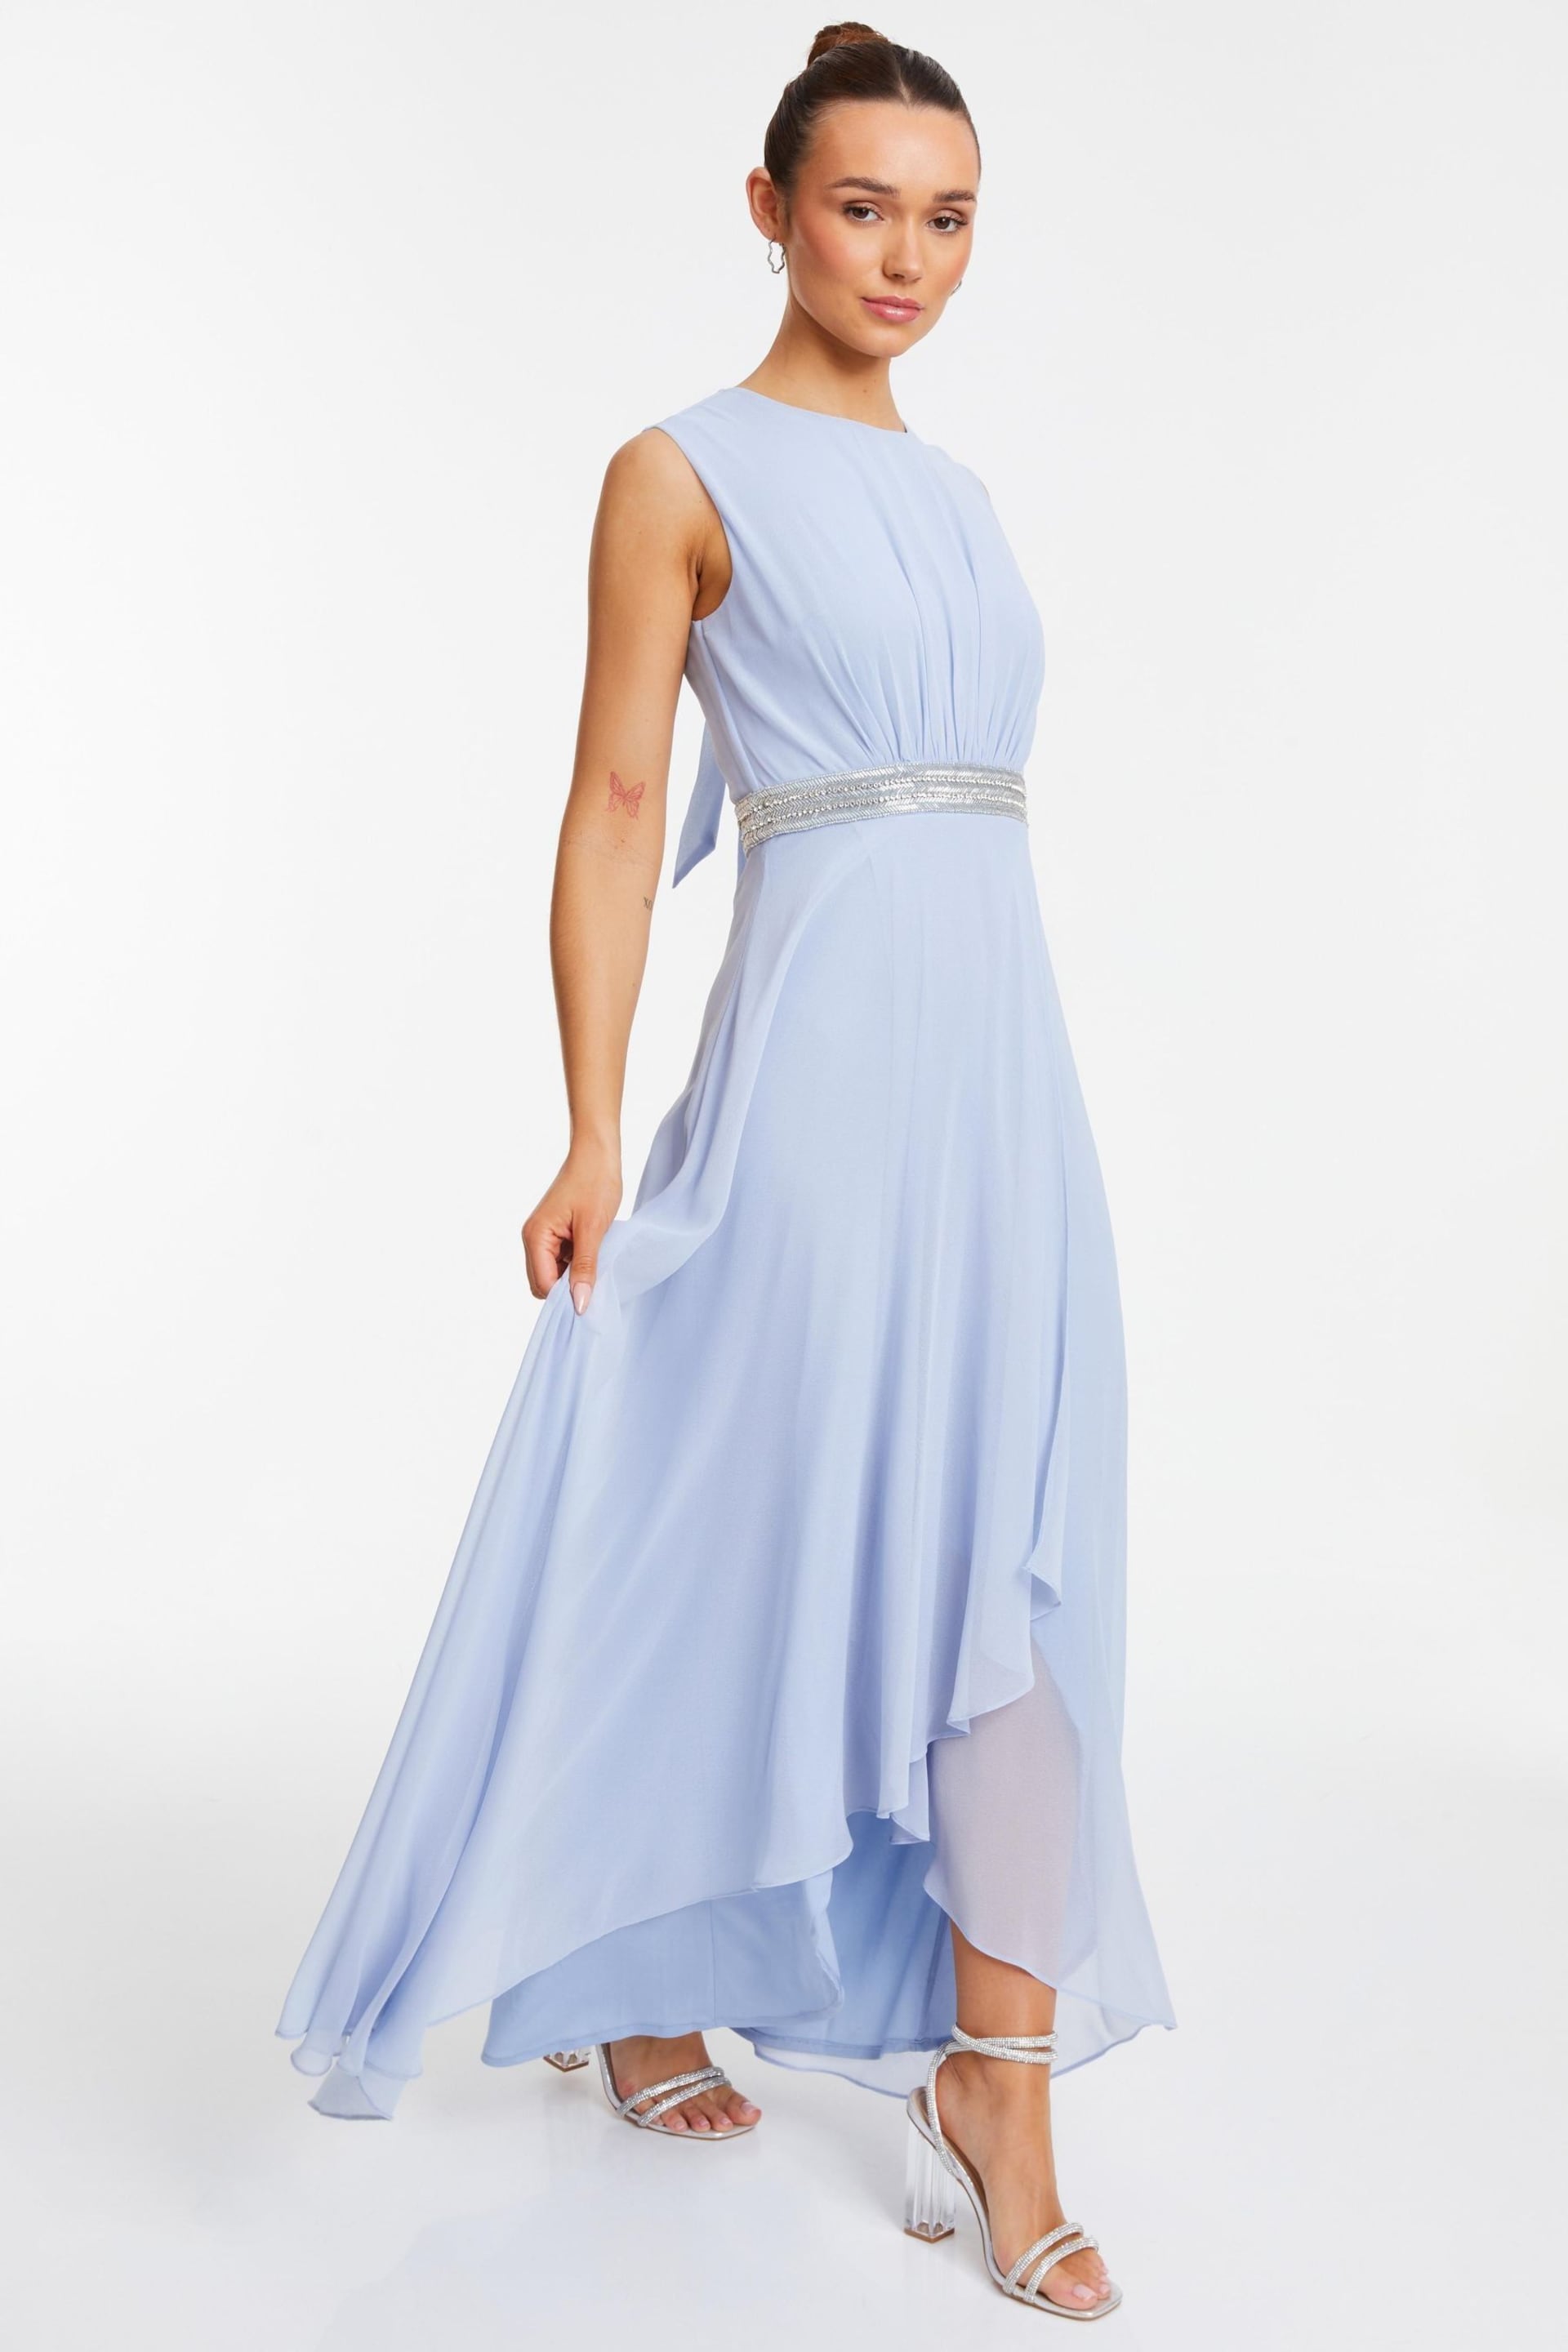 Quiz Light Blue Chiffon Maxi Bridesmaid Dress with Sequin Belt - Image 4 of 8